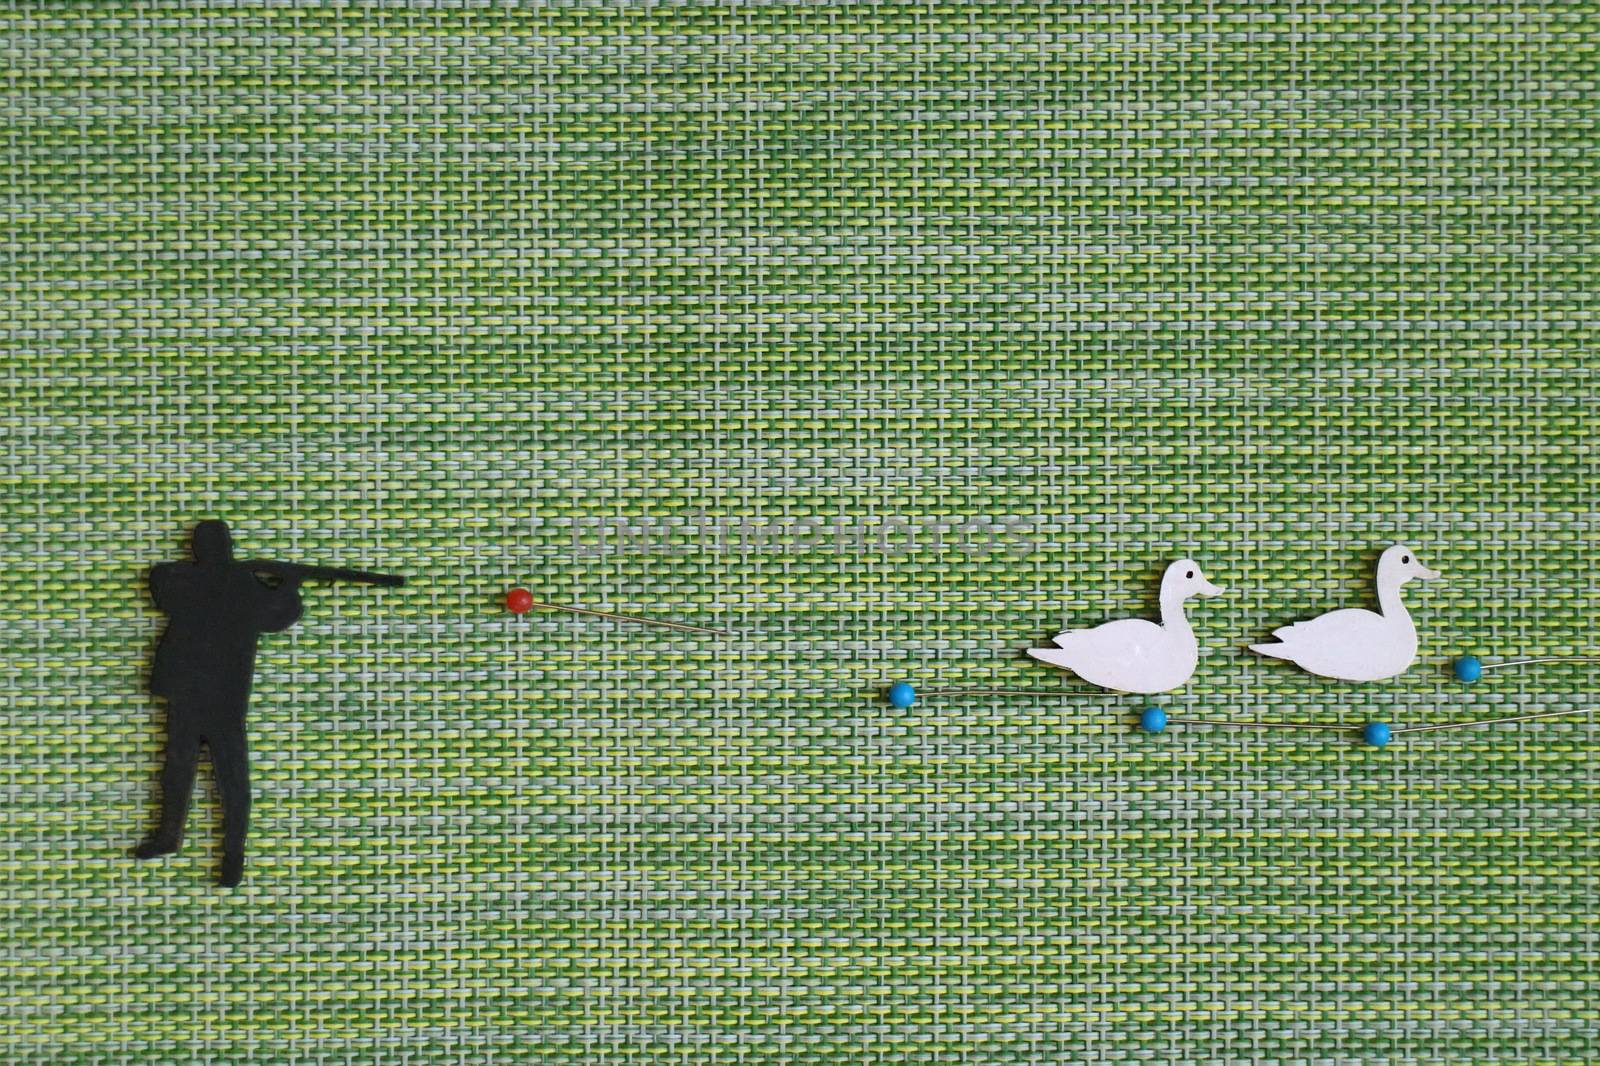 hunter shoots white ducks flat lay by mrivserg